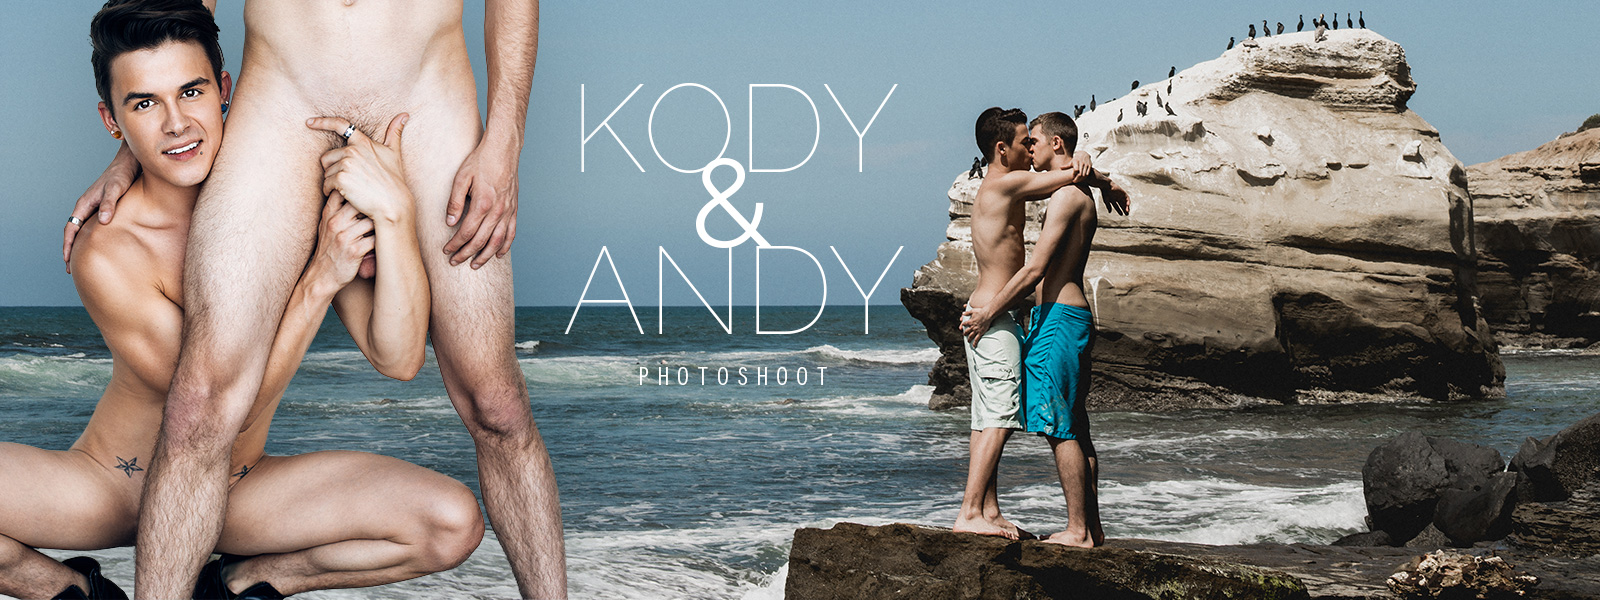 Andy & Kody Photoshoot